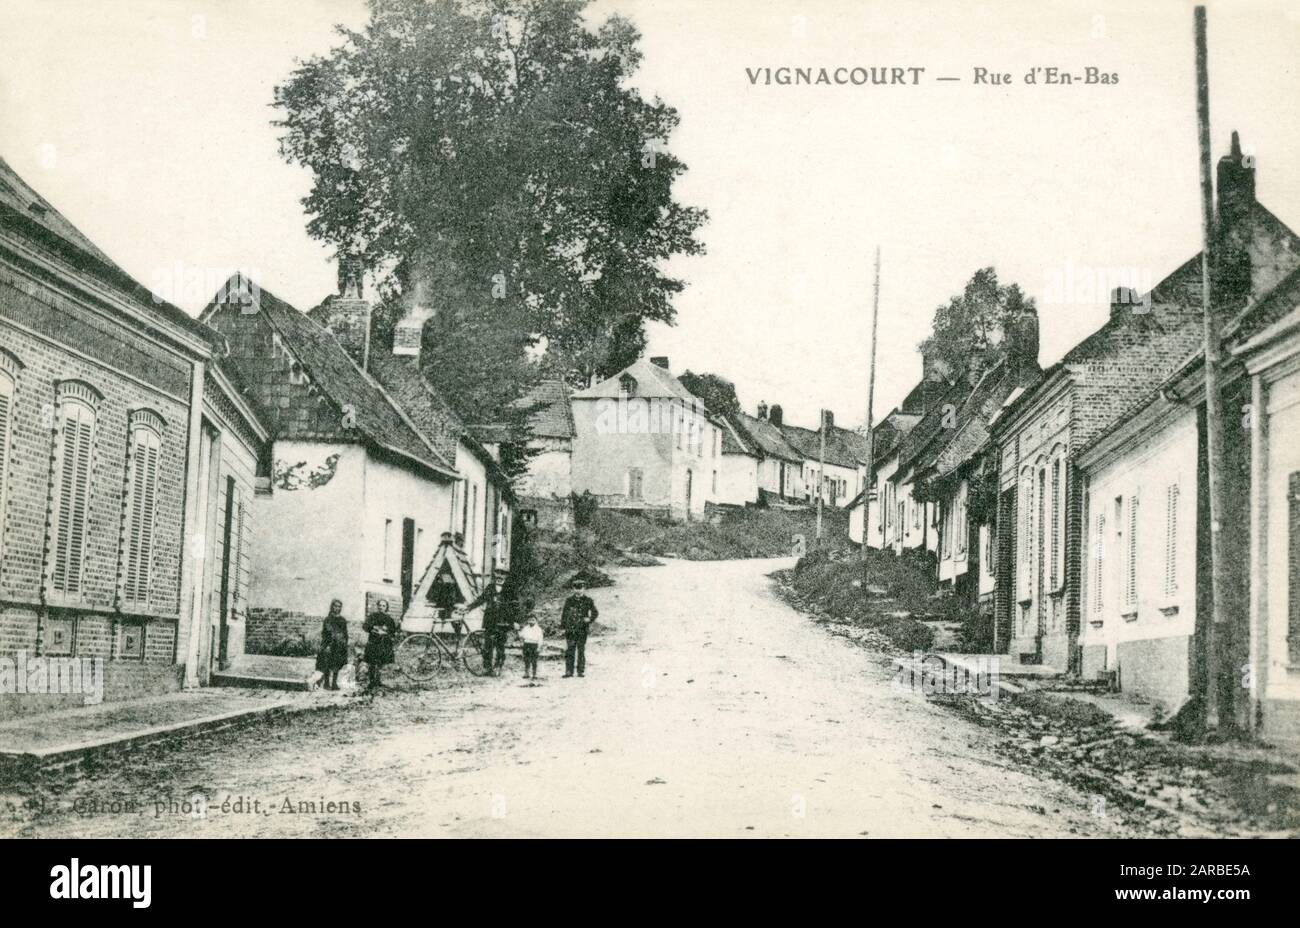 Rue d'En-Bas, Vignacourt, France     Date: circa 1909 Stock Photo